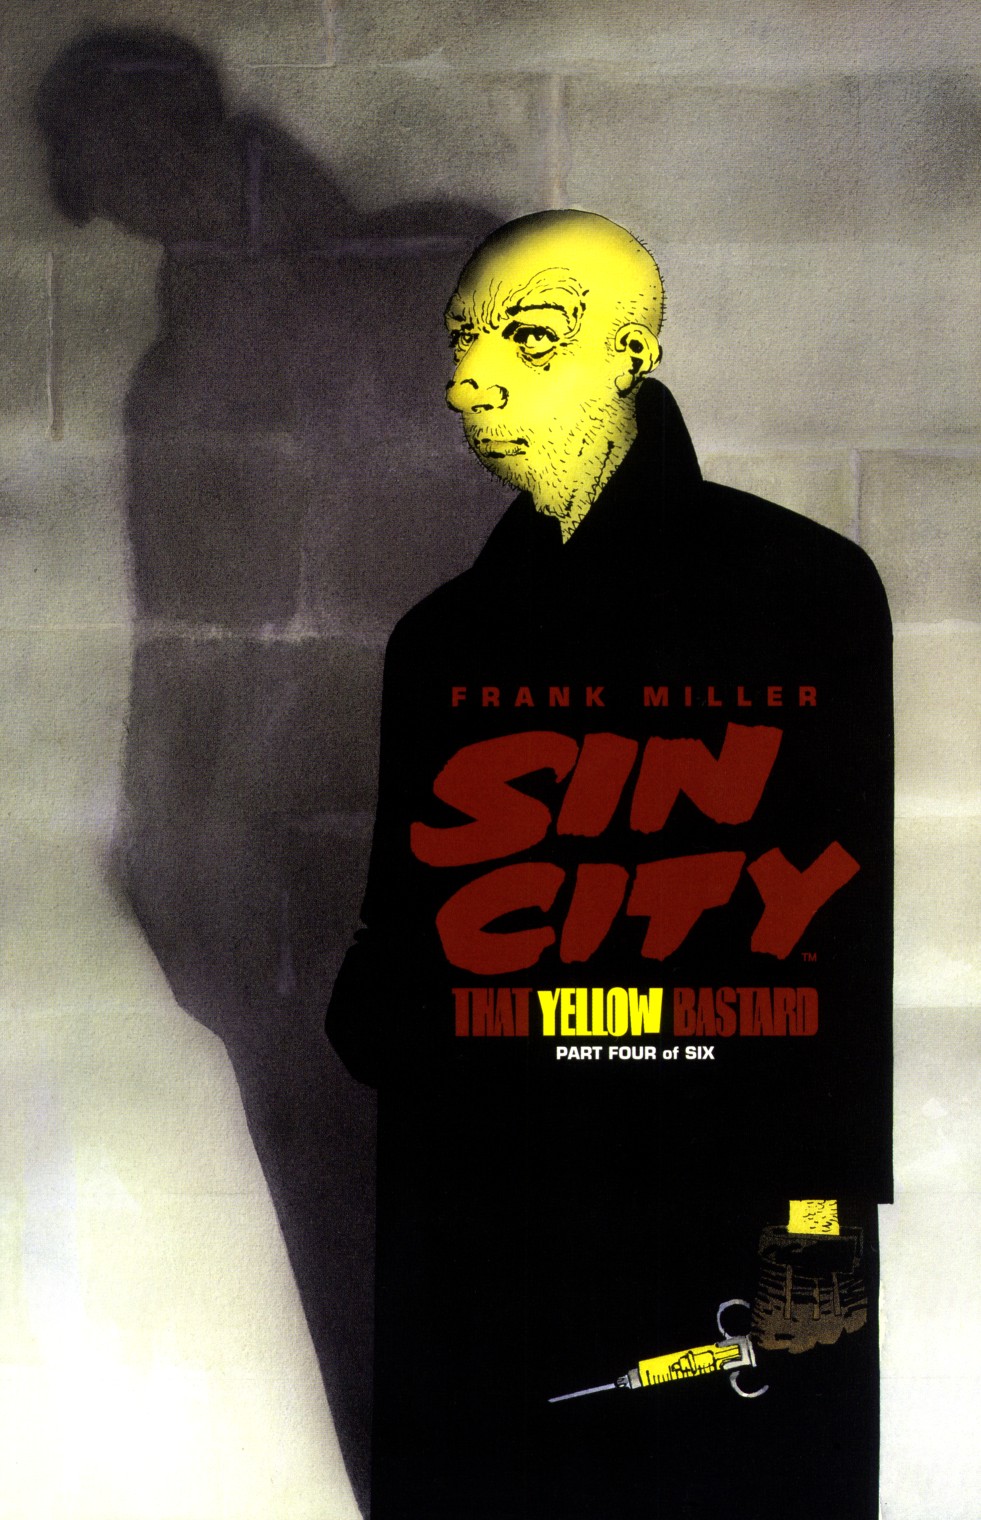 Sin City: That Yellow Bastard 4 of 6